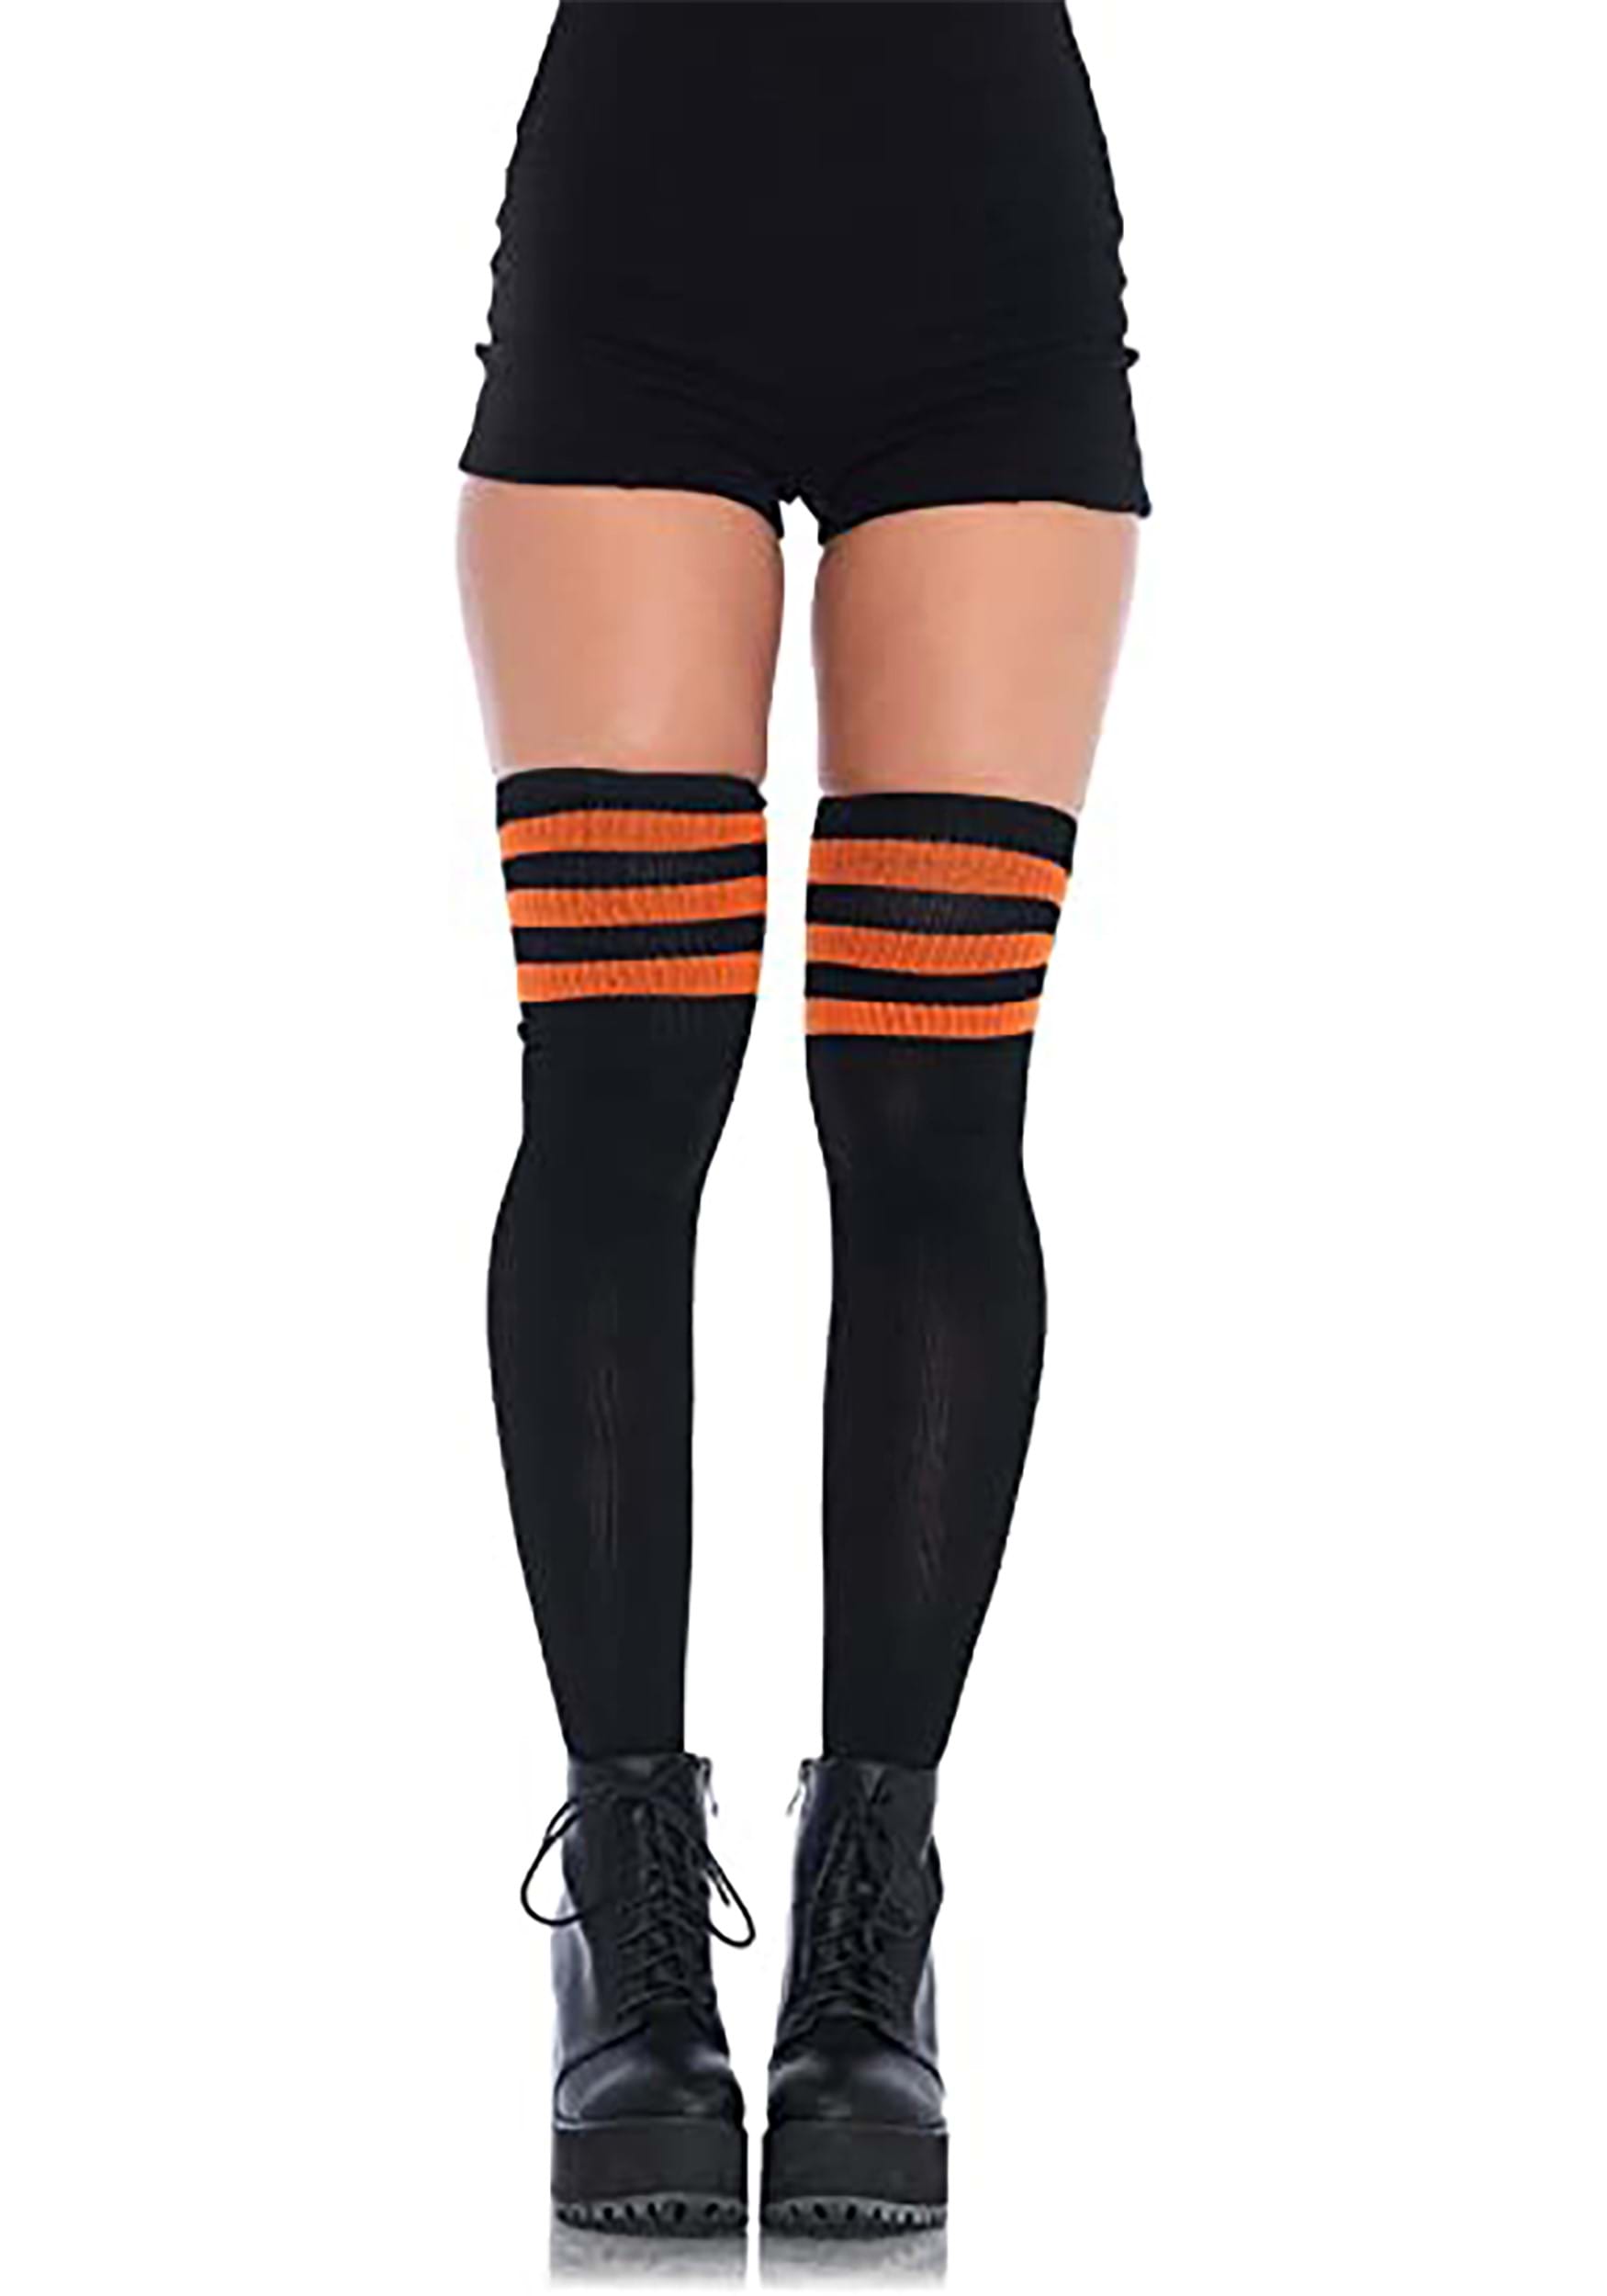 Women’s Thigh High Black Athletic Socks w/ Orange Stripes